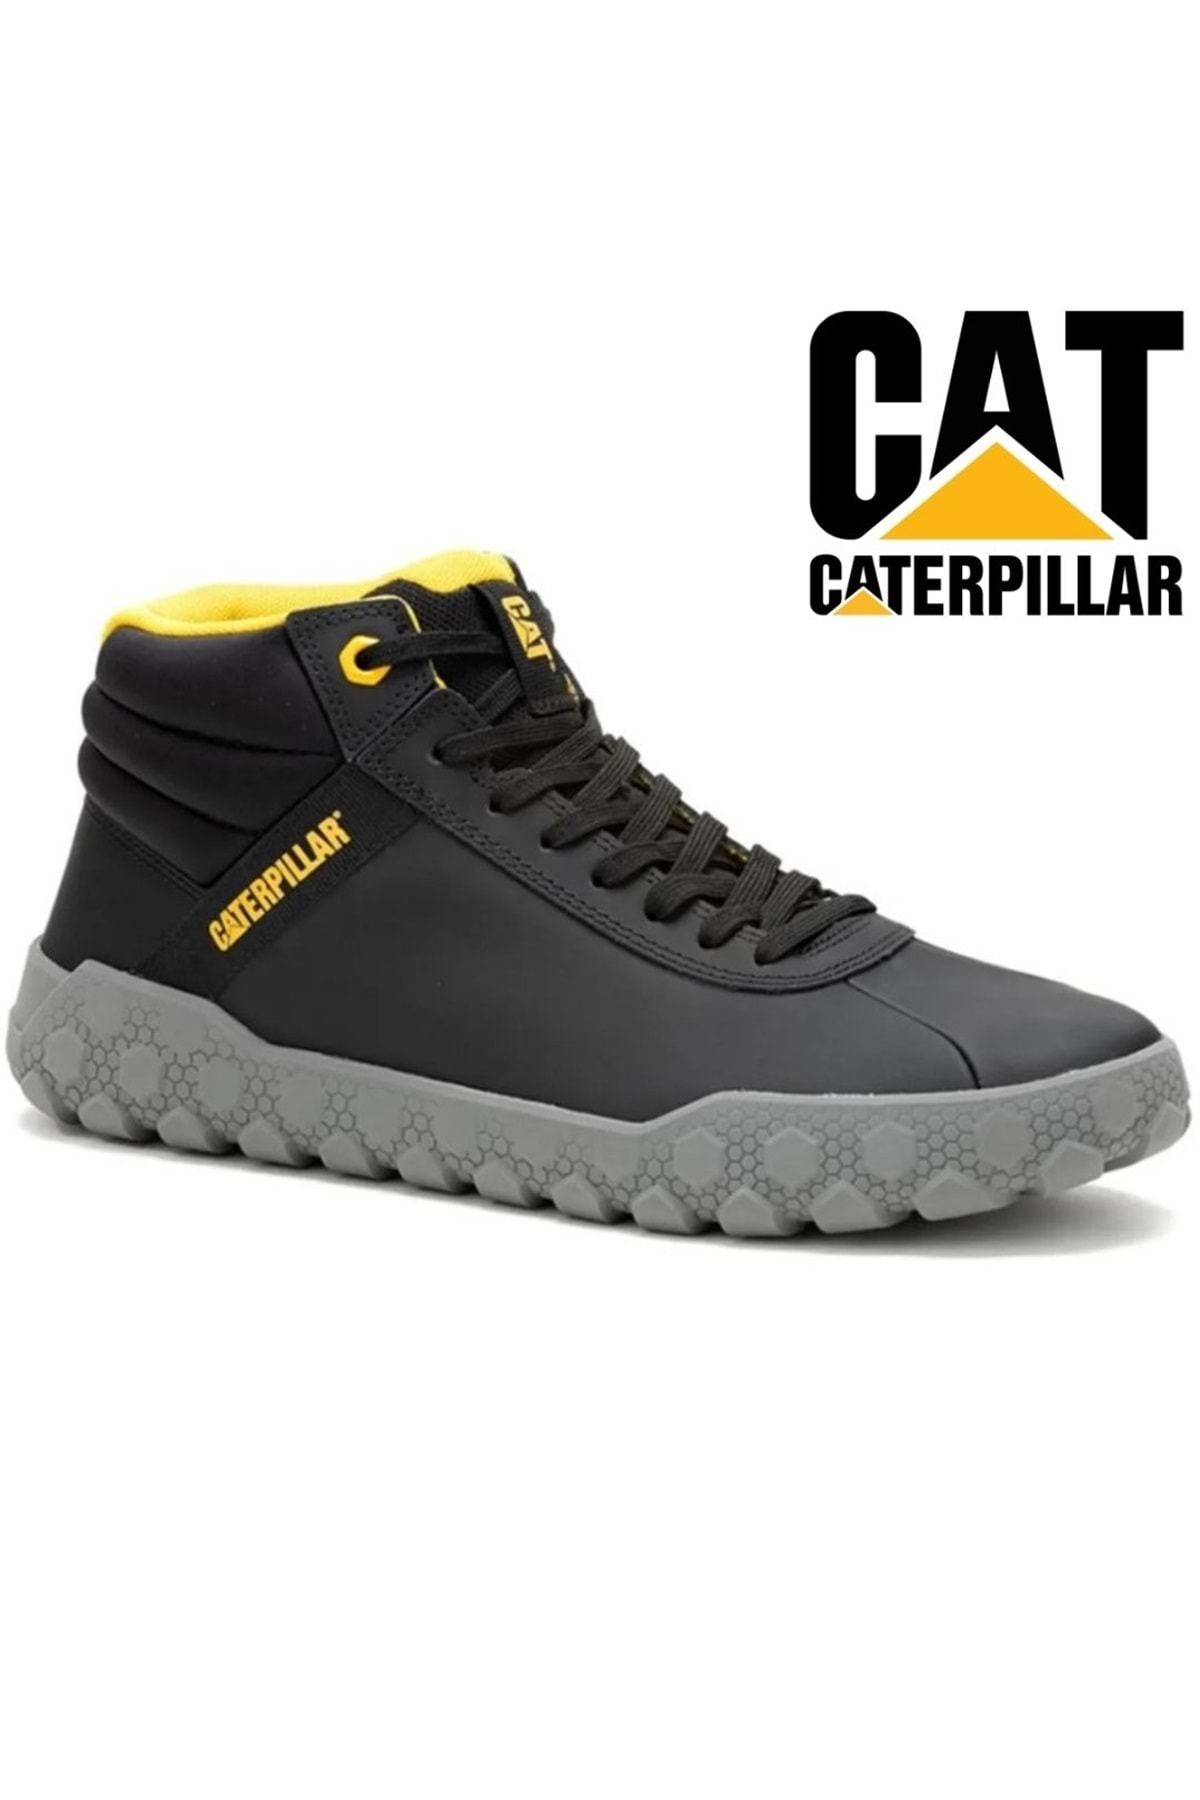 Cat Caterpillar P111350 Hex + Mid Boots Casual Erkek Bot SİYAH-SARI